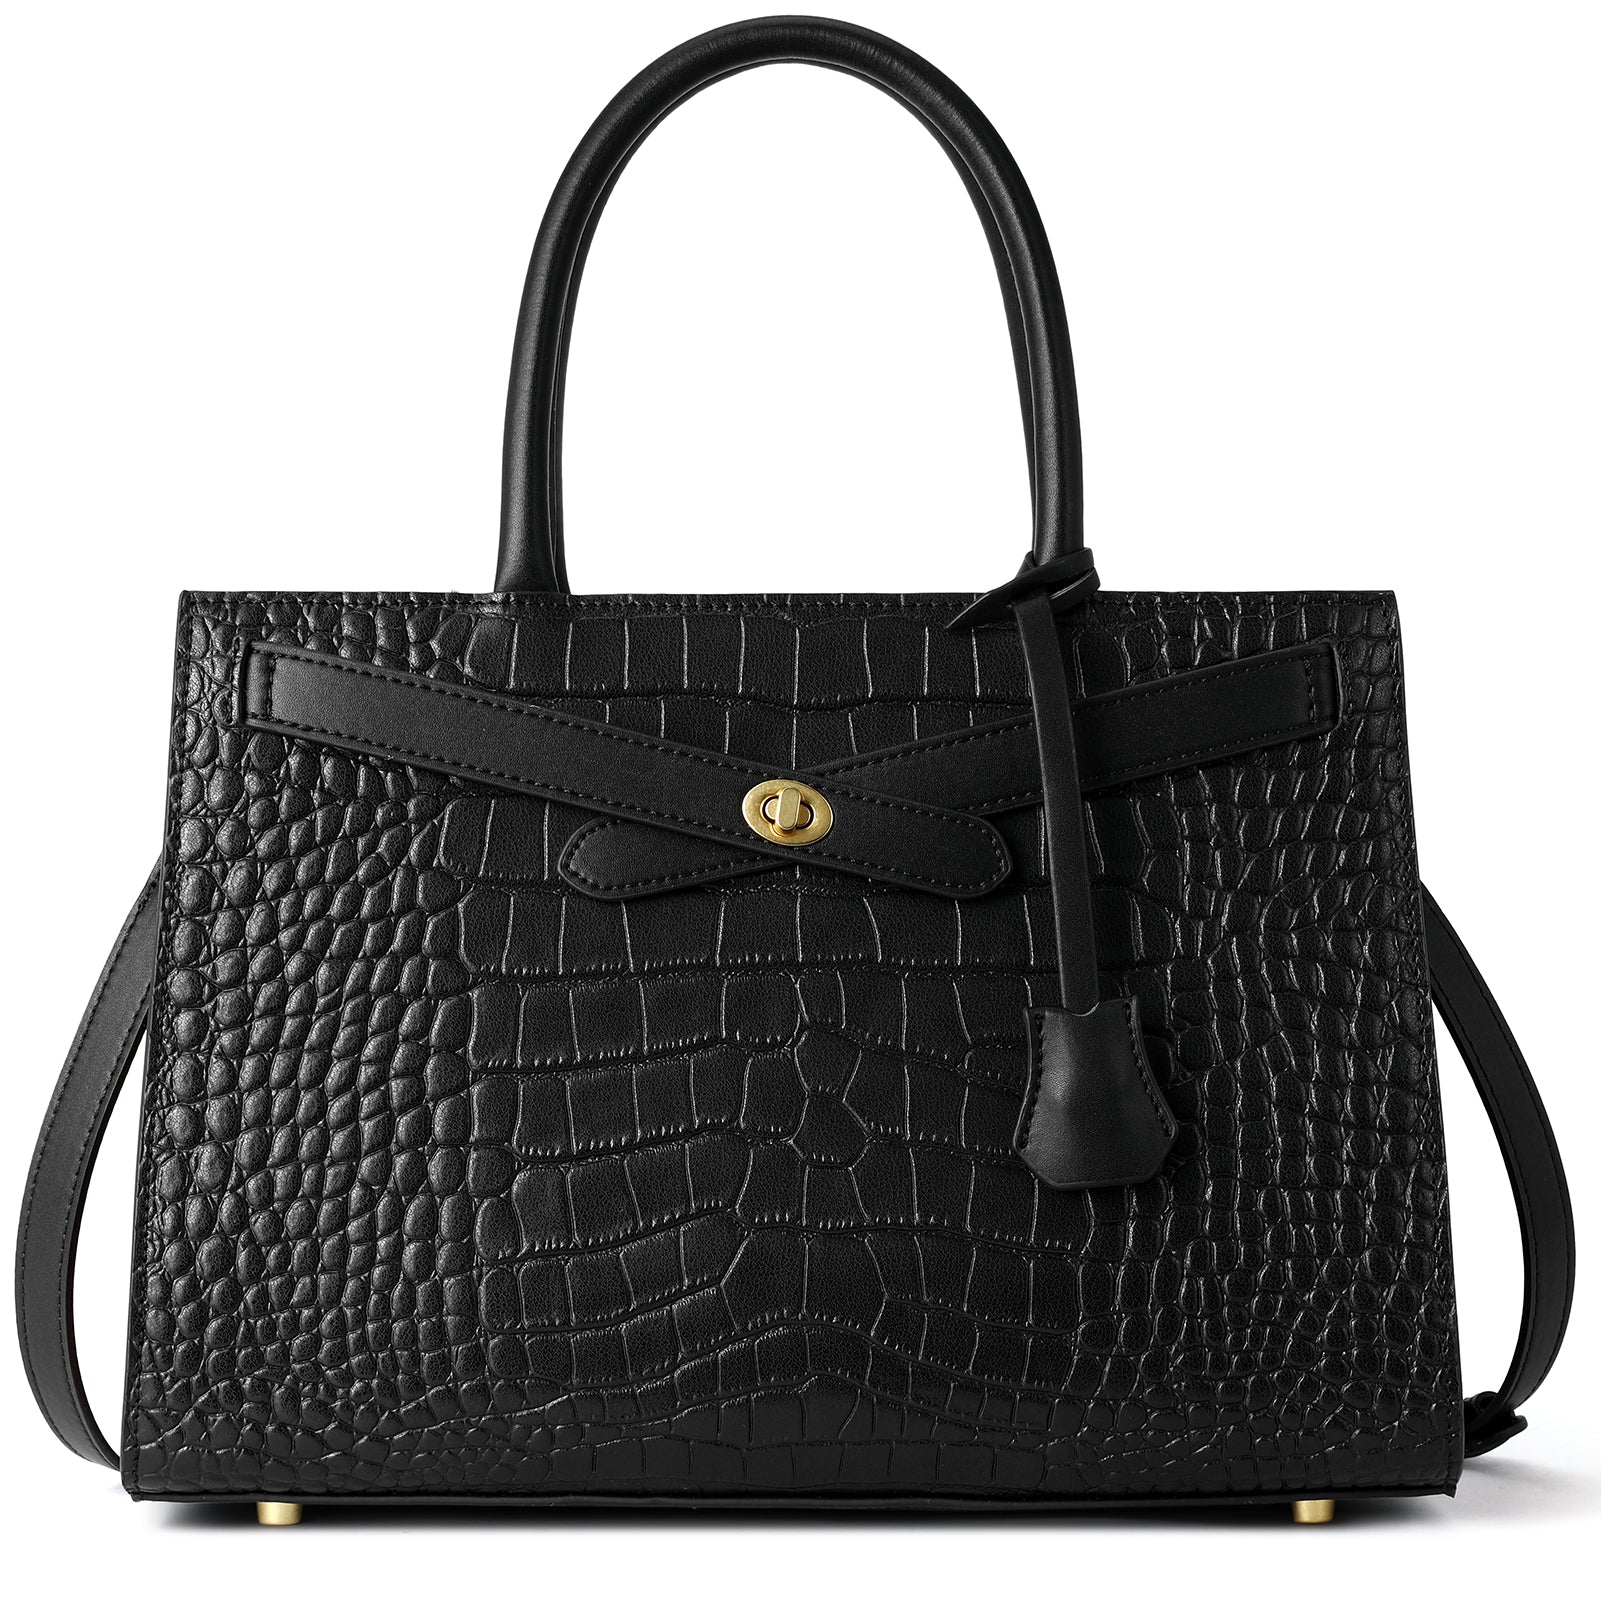 Buy MIRAGGIO Adia Satchel Handbag for Women with Sling/Crossbody Bag - Black  online